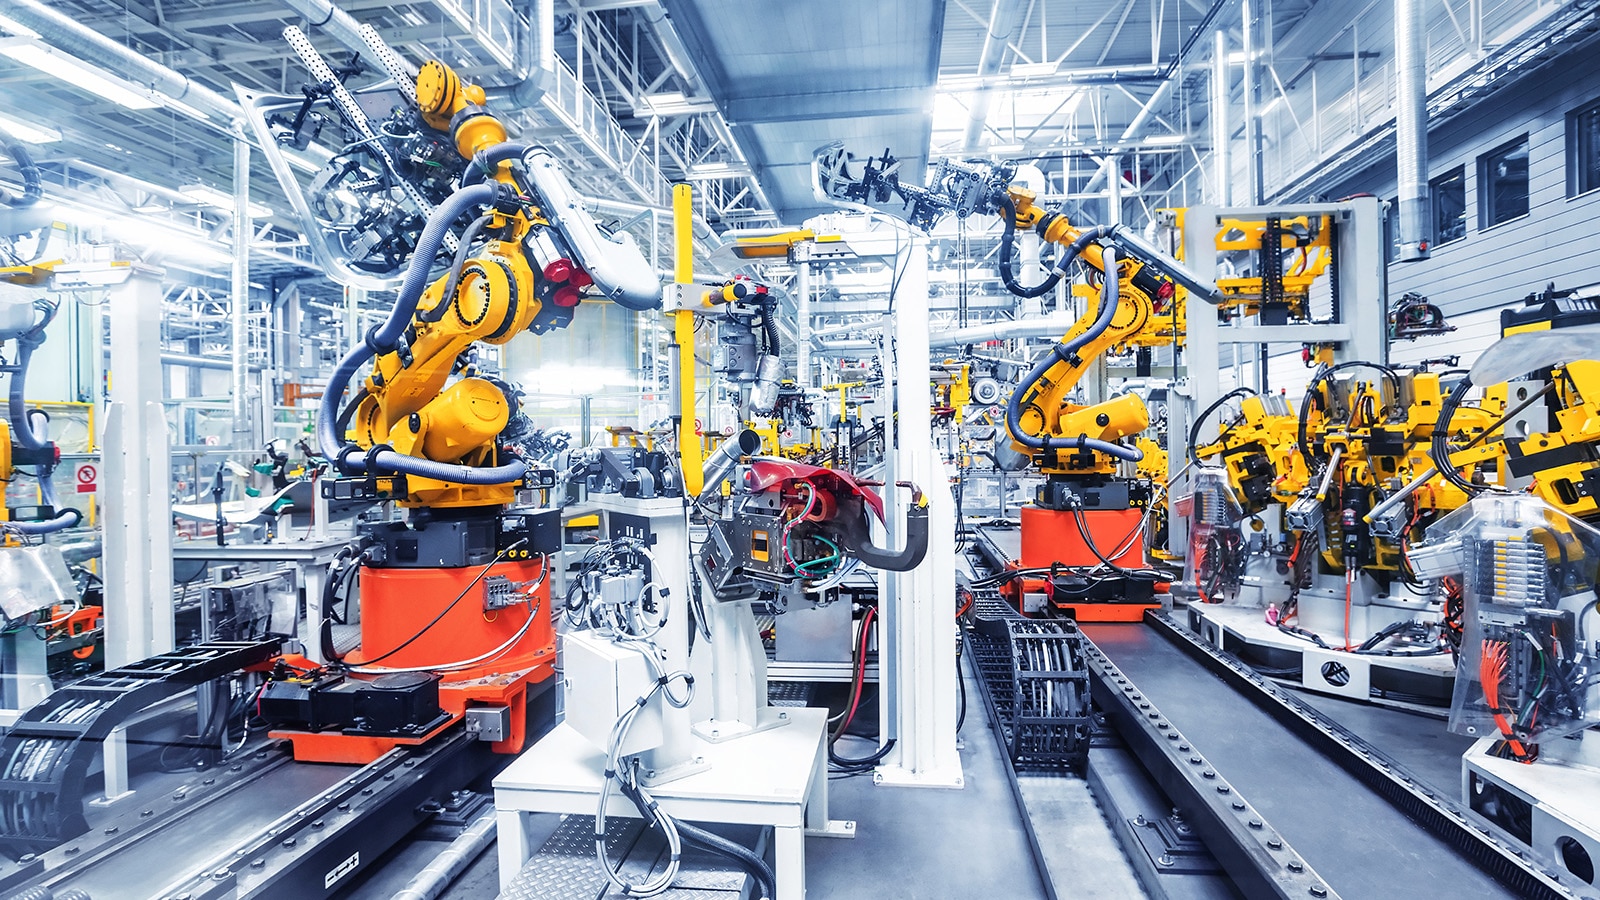 Industry applications. Автоматизация производства. Промышленность. Промышленное производство. Автоматизация производственных процессов.